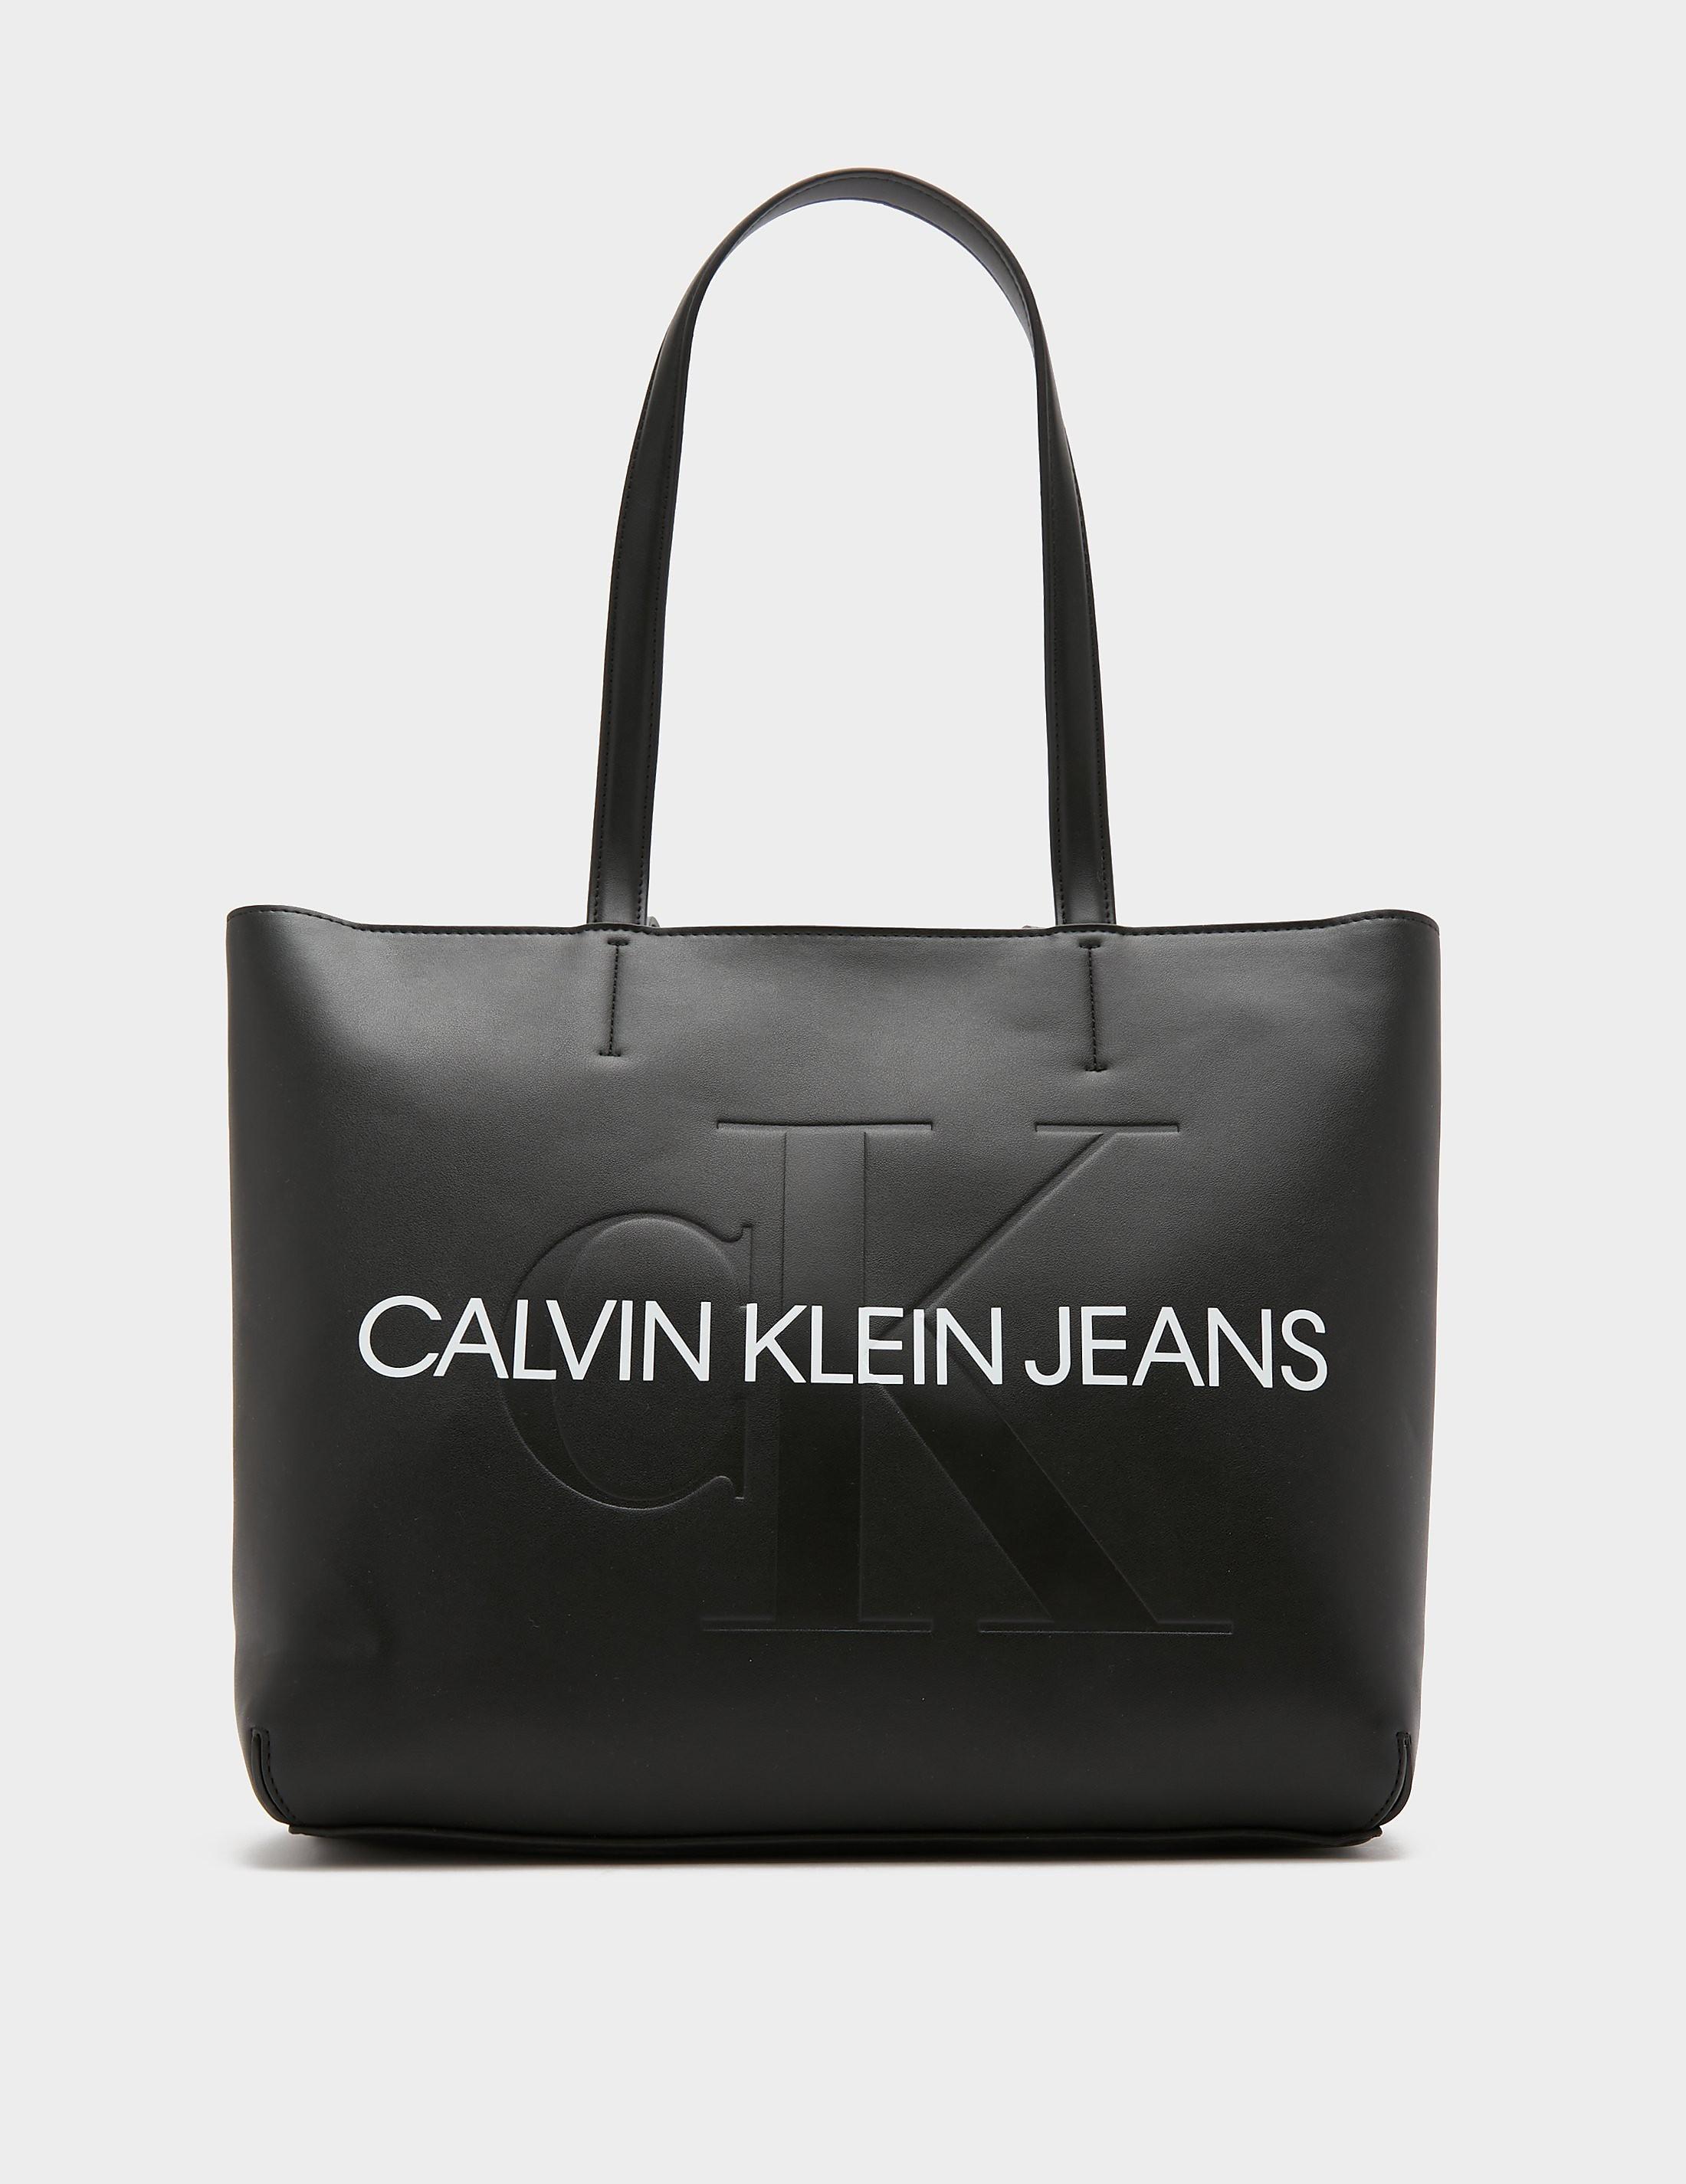 Leather Handbags Calvin Klein Women Women Bags Calvin Klein Women Leather Bags Calvin Klein Women Leather Handbags Calvin Klein Women Leather Handbag CALVIN KLEIN white 